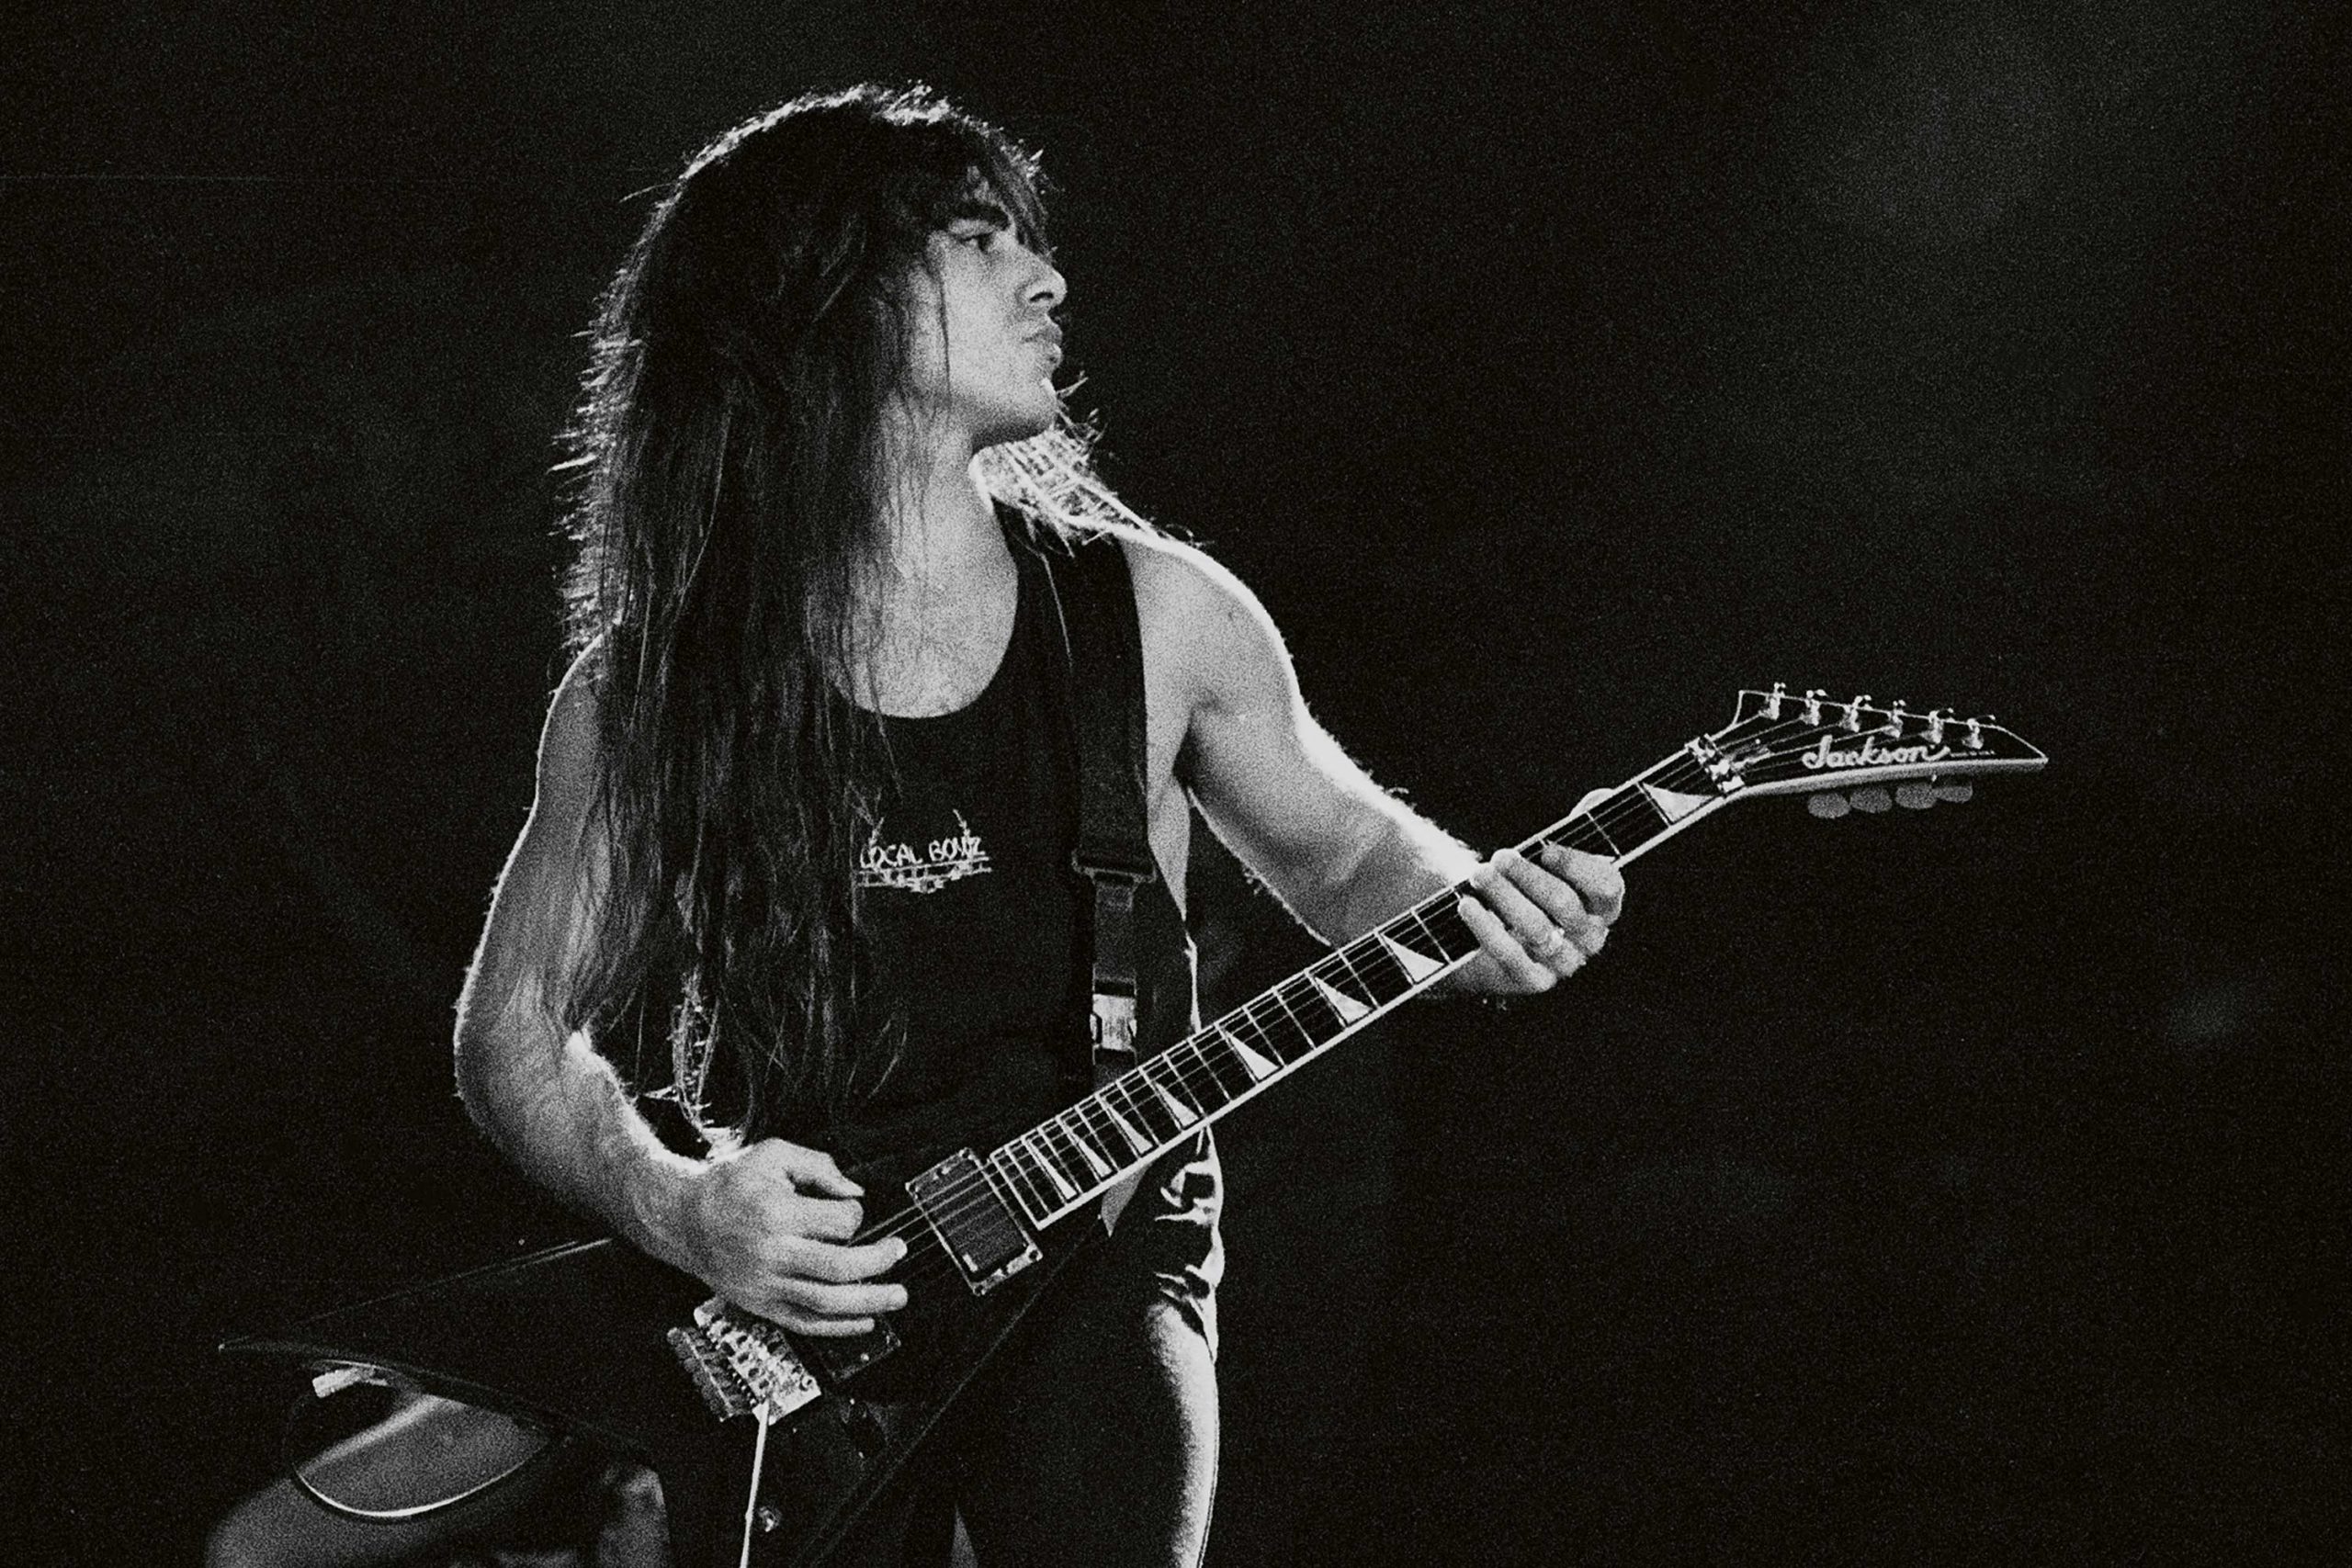 Dan Spitz of Anthrax performing at The Spectrum on June 29, 1991 in Philadelphia (Image: Lisa Lake/Getty Images)